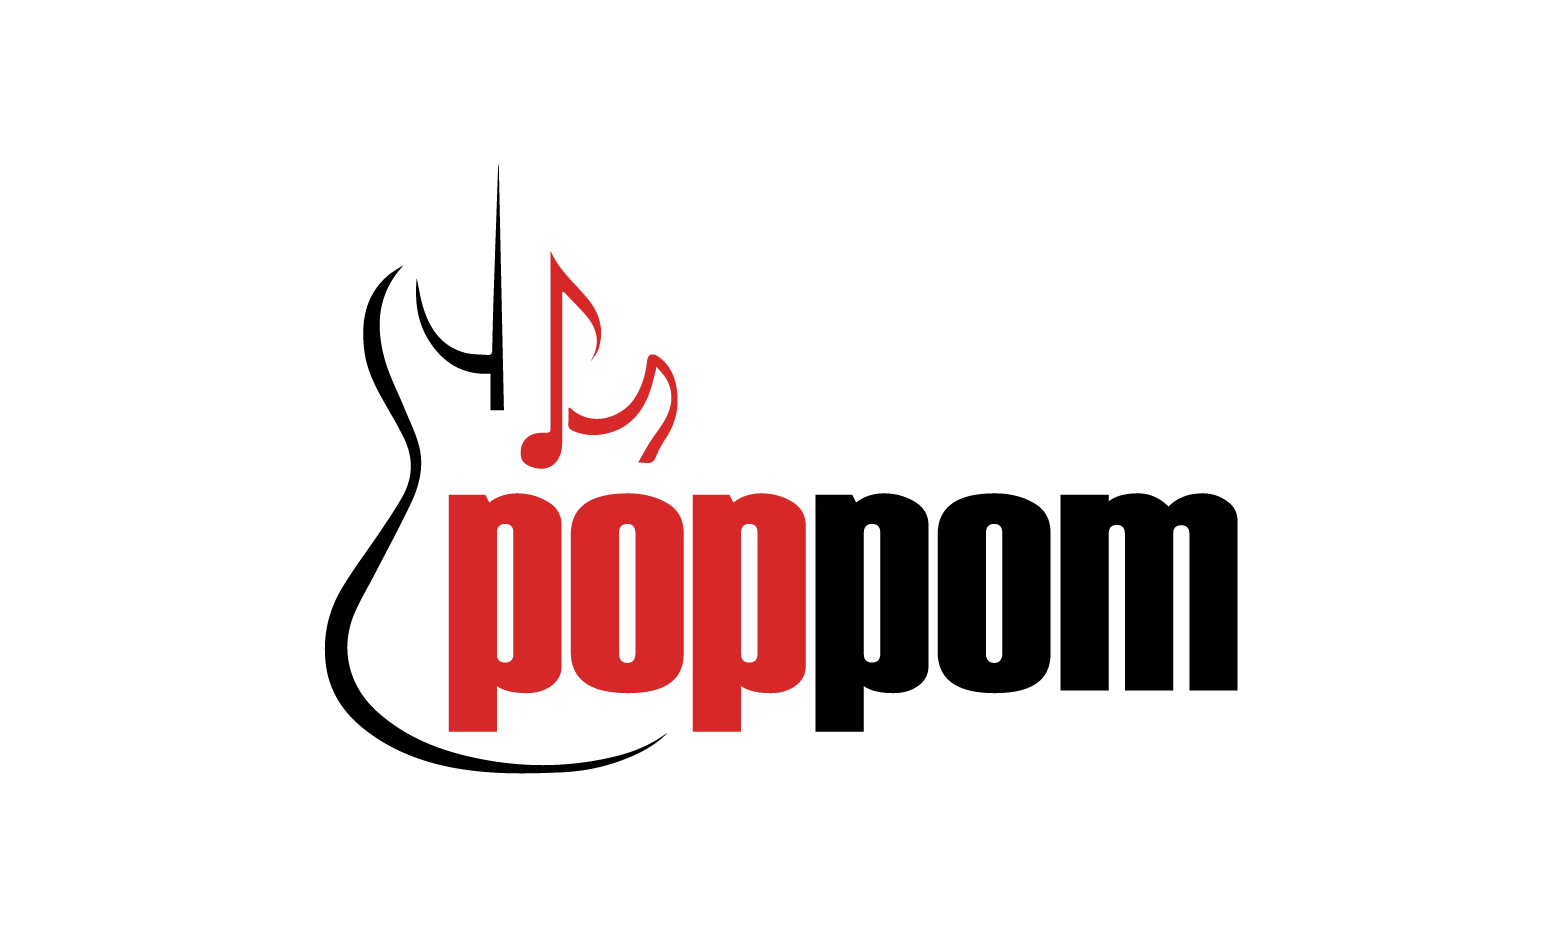 Poppom.com - Creative brandable domain for sale